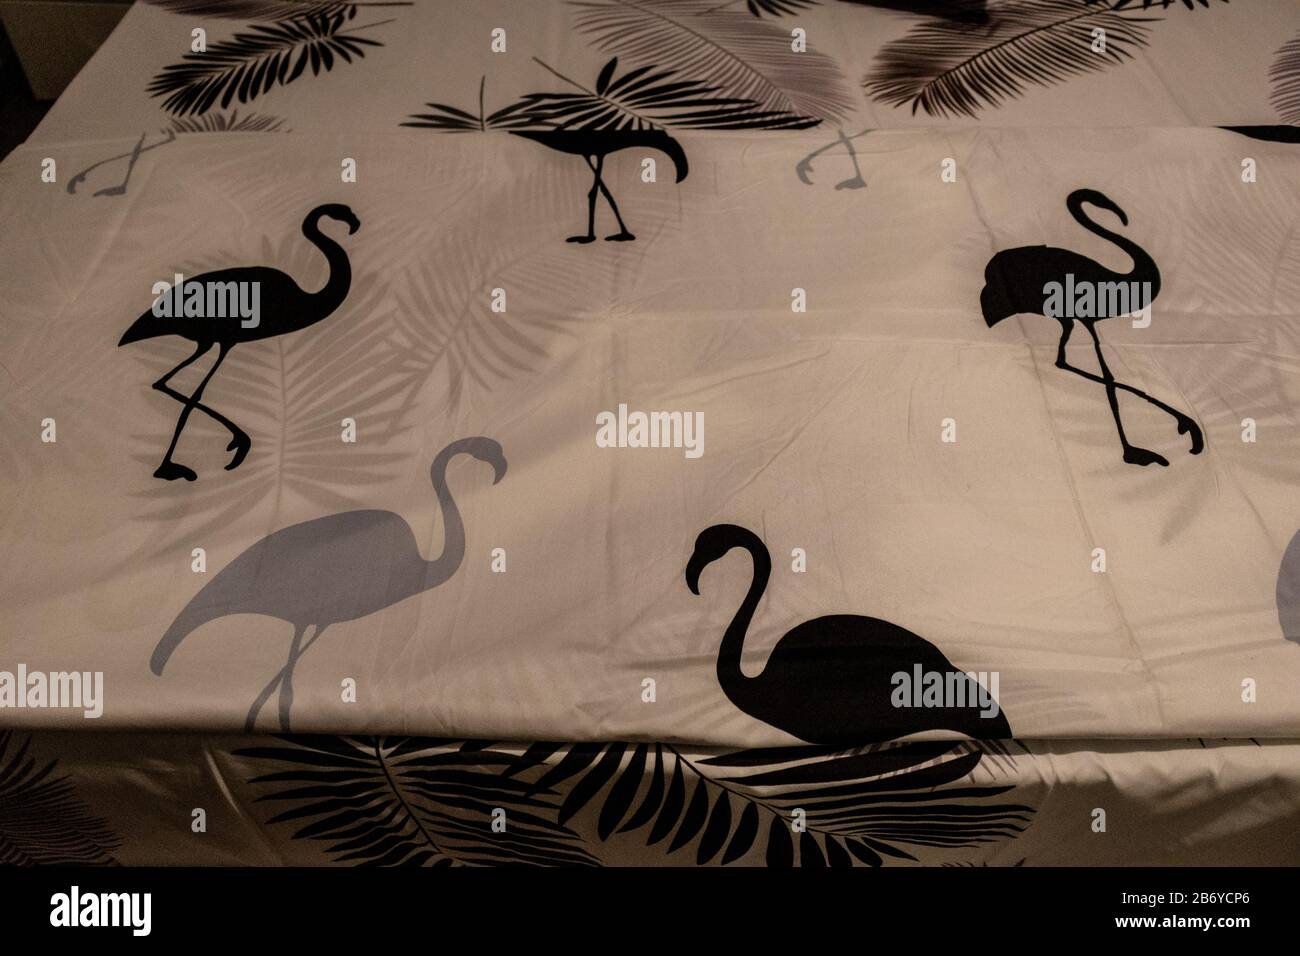 Ropa de cama de flamenco fotografías e imágenes de alta resolución - Alamy